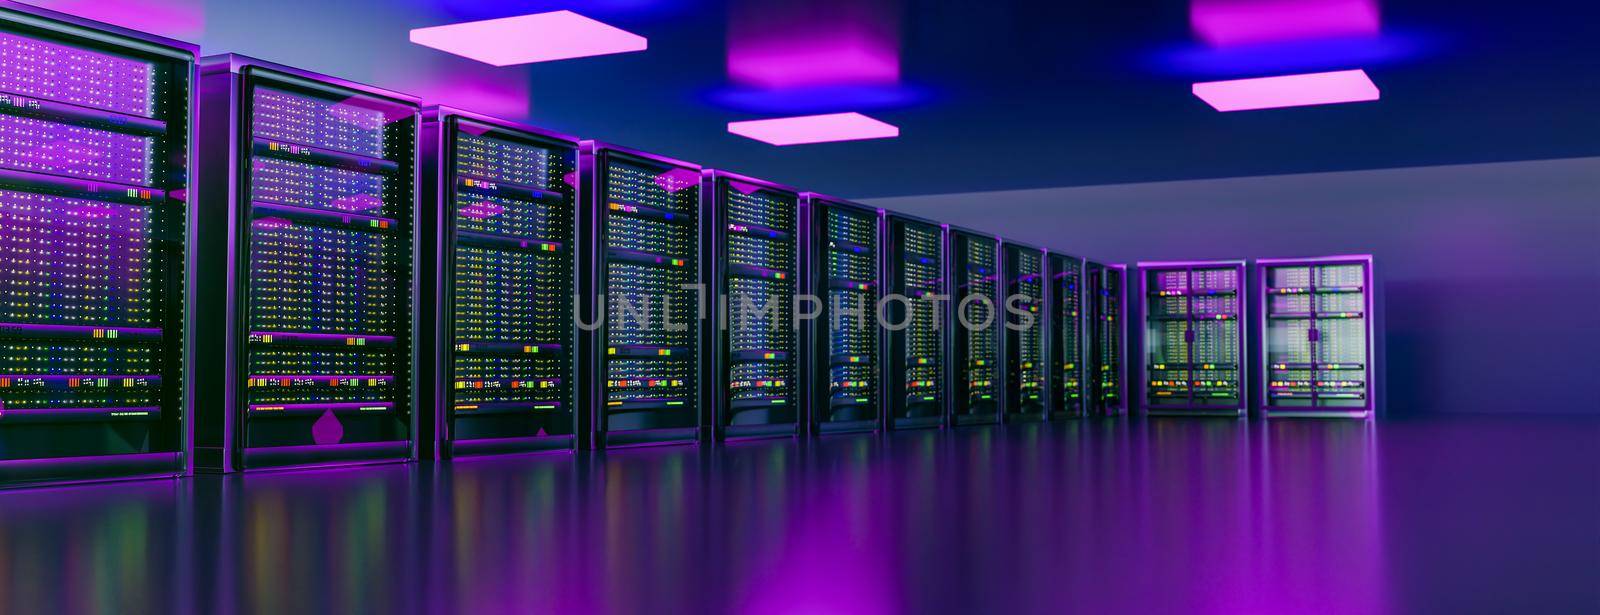 Server. Server room data center. Backup, mining, hosting, mainframe, farm and computer rack with storage information. 3d render by kwarkot